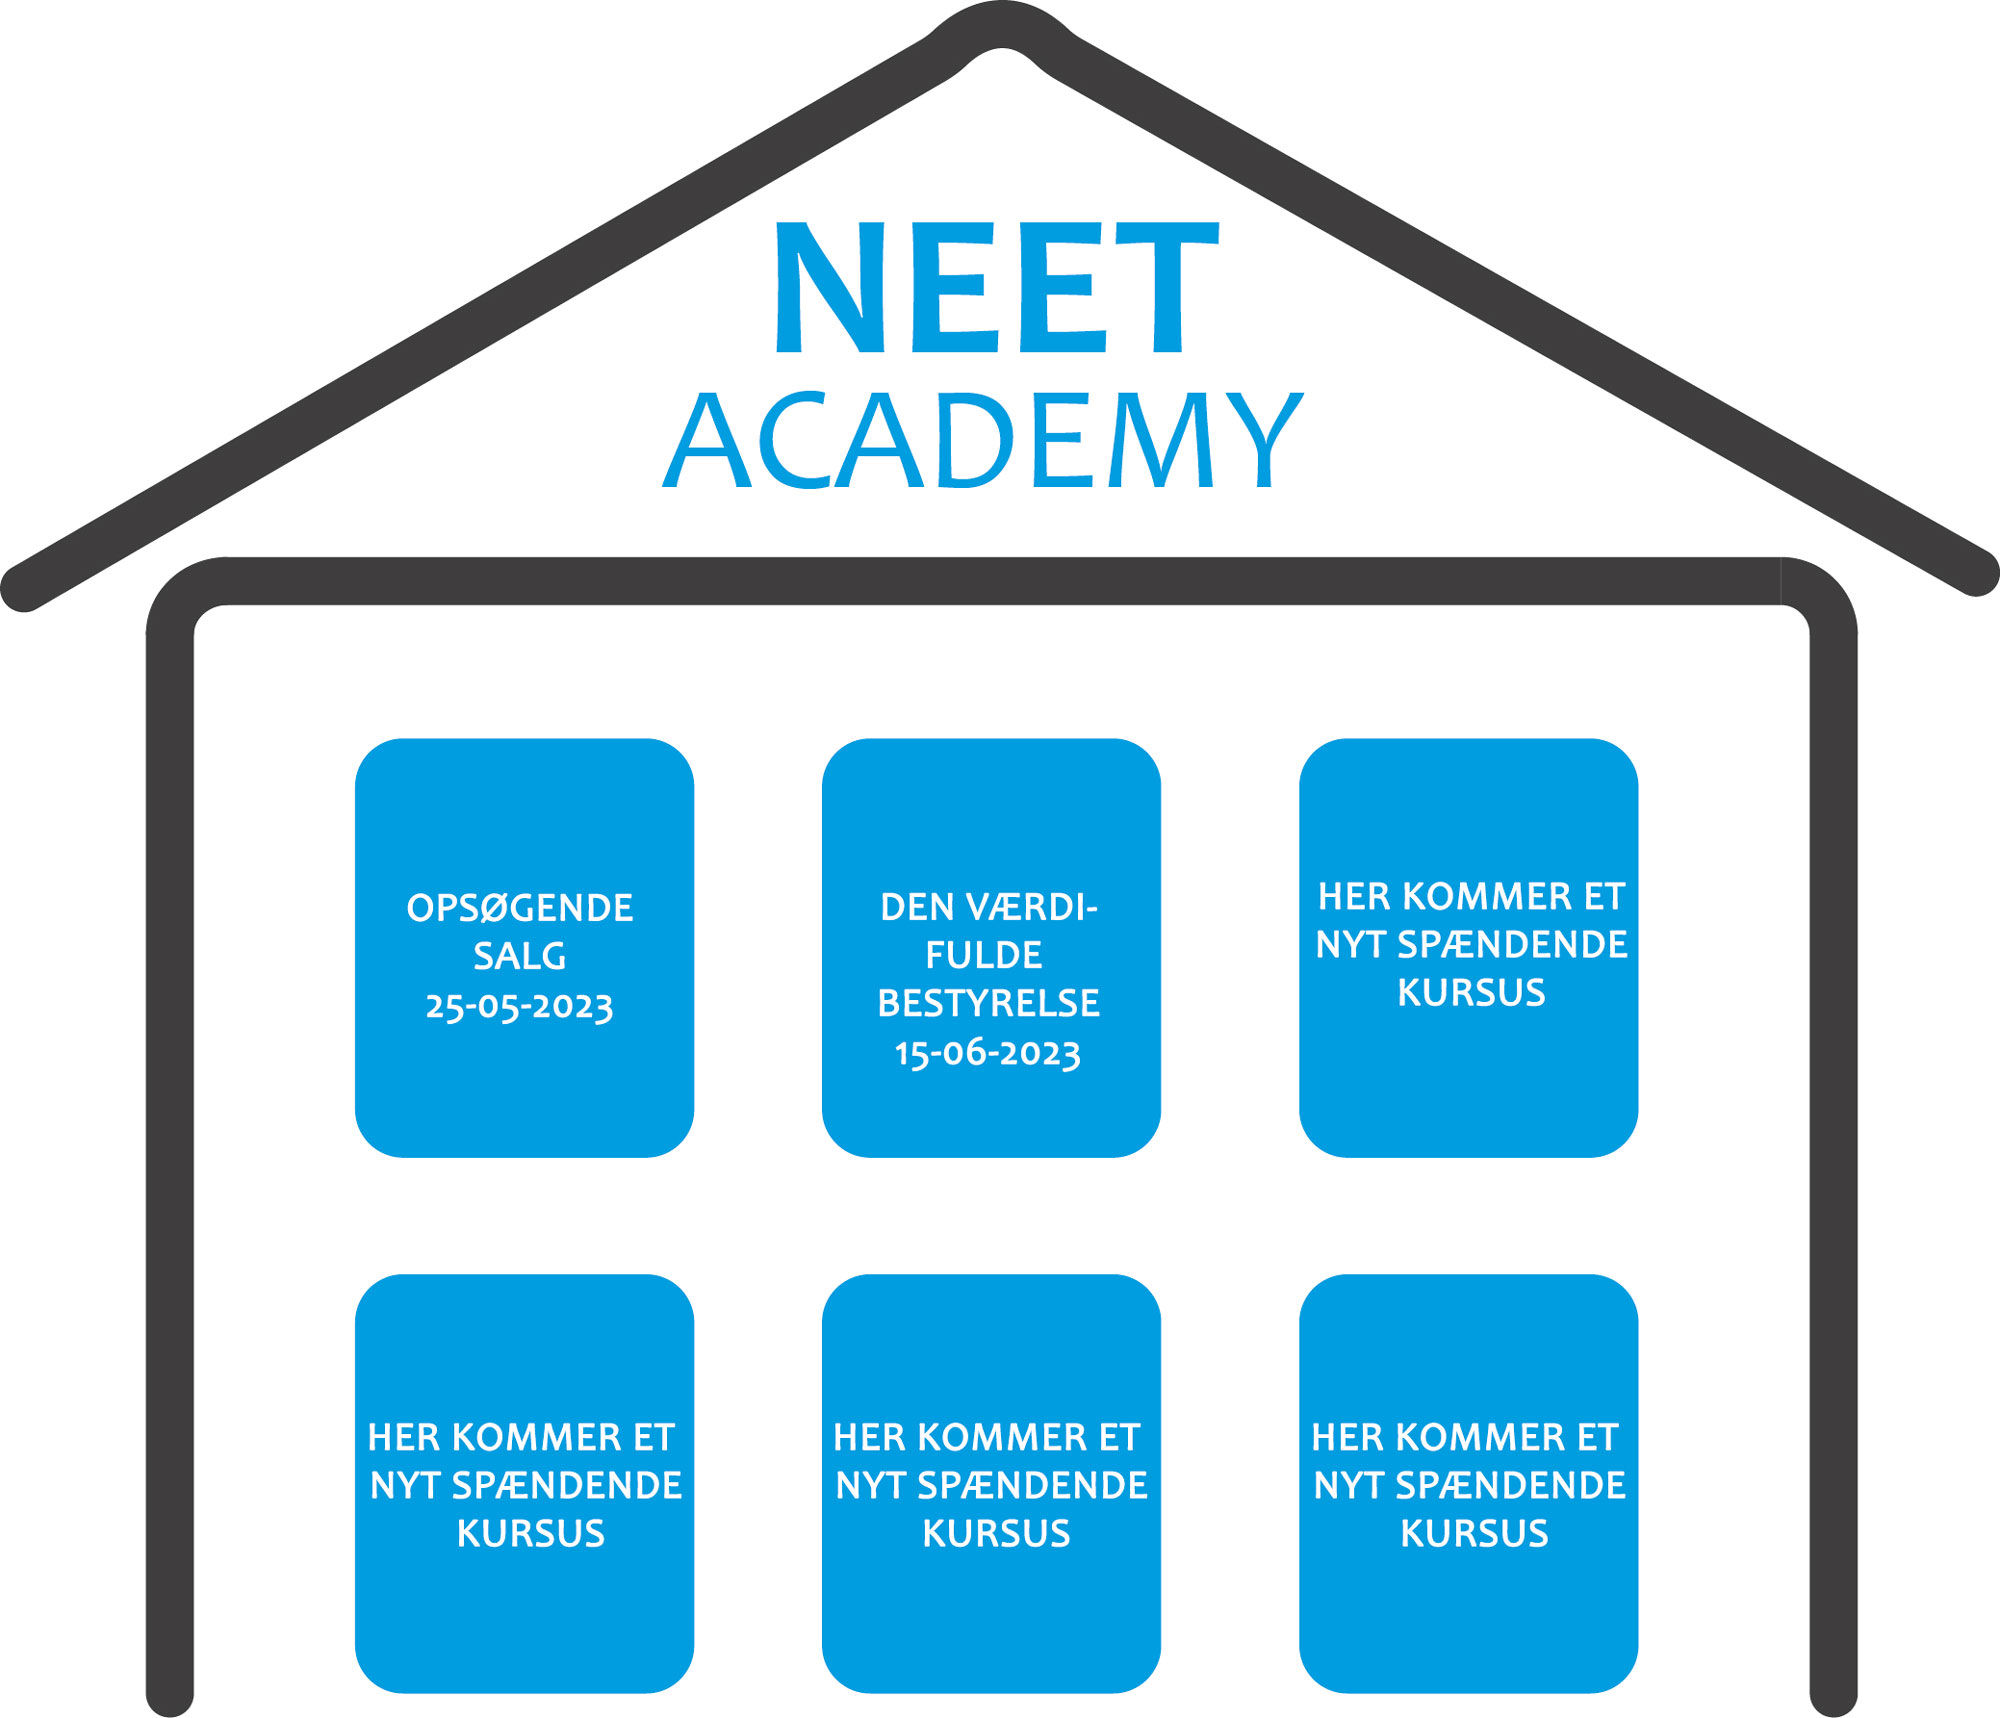 NEET Academy to kurser